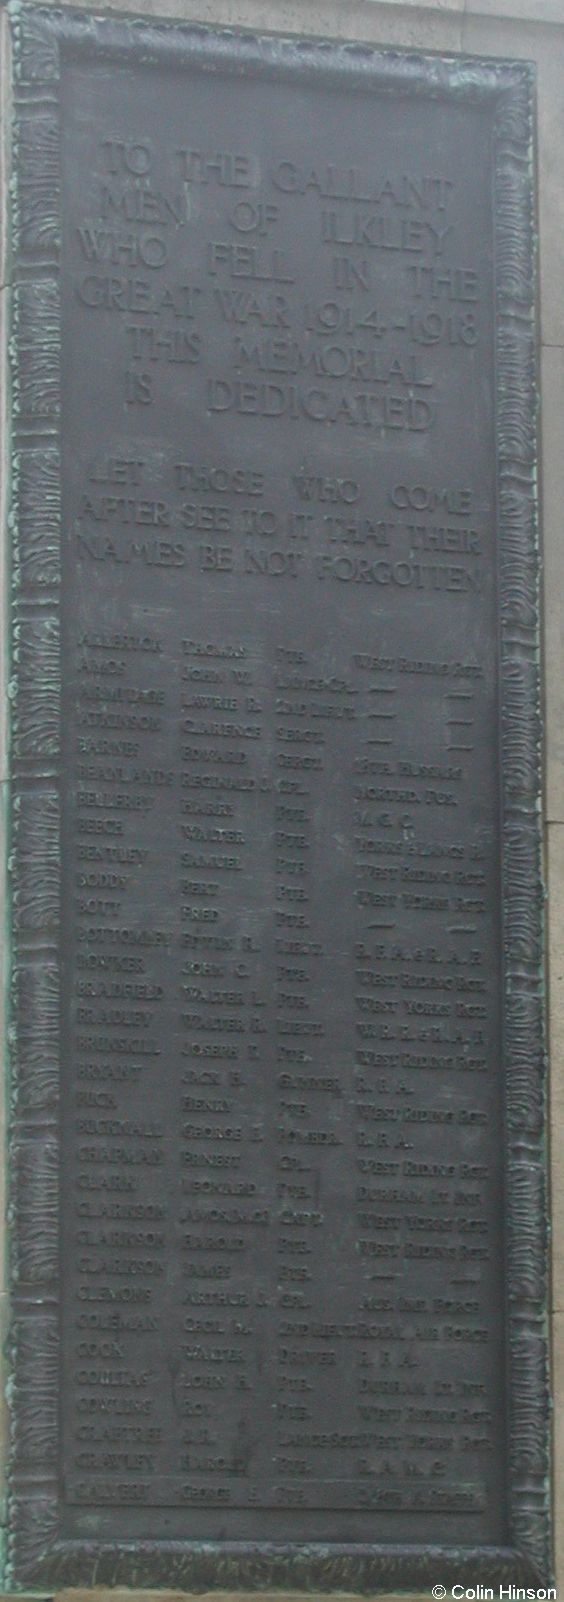 The World War I Memorial at Ilkley.